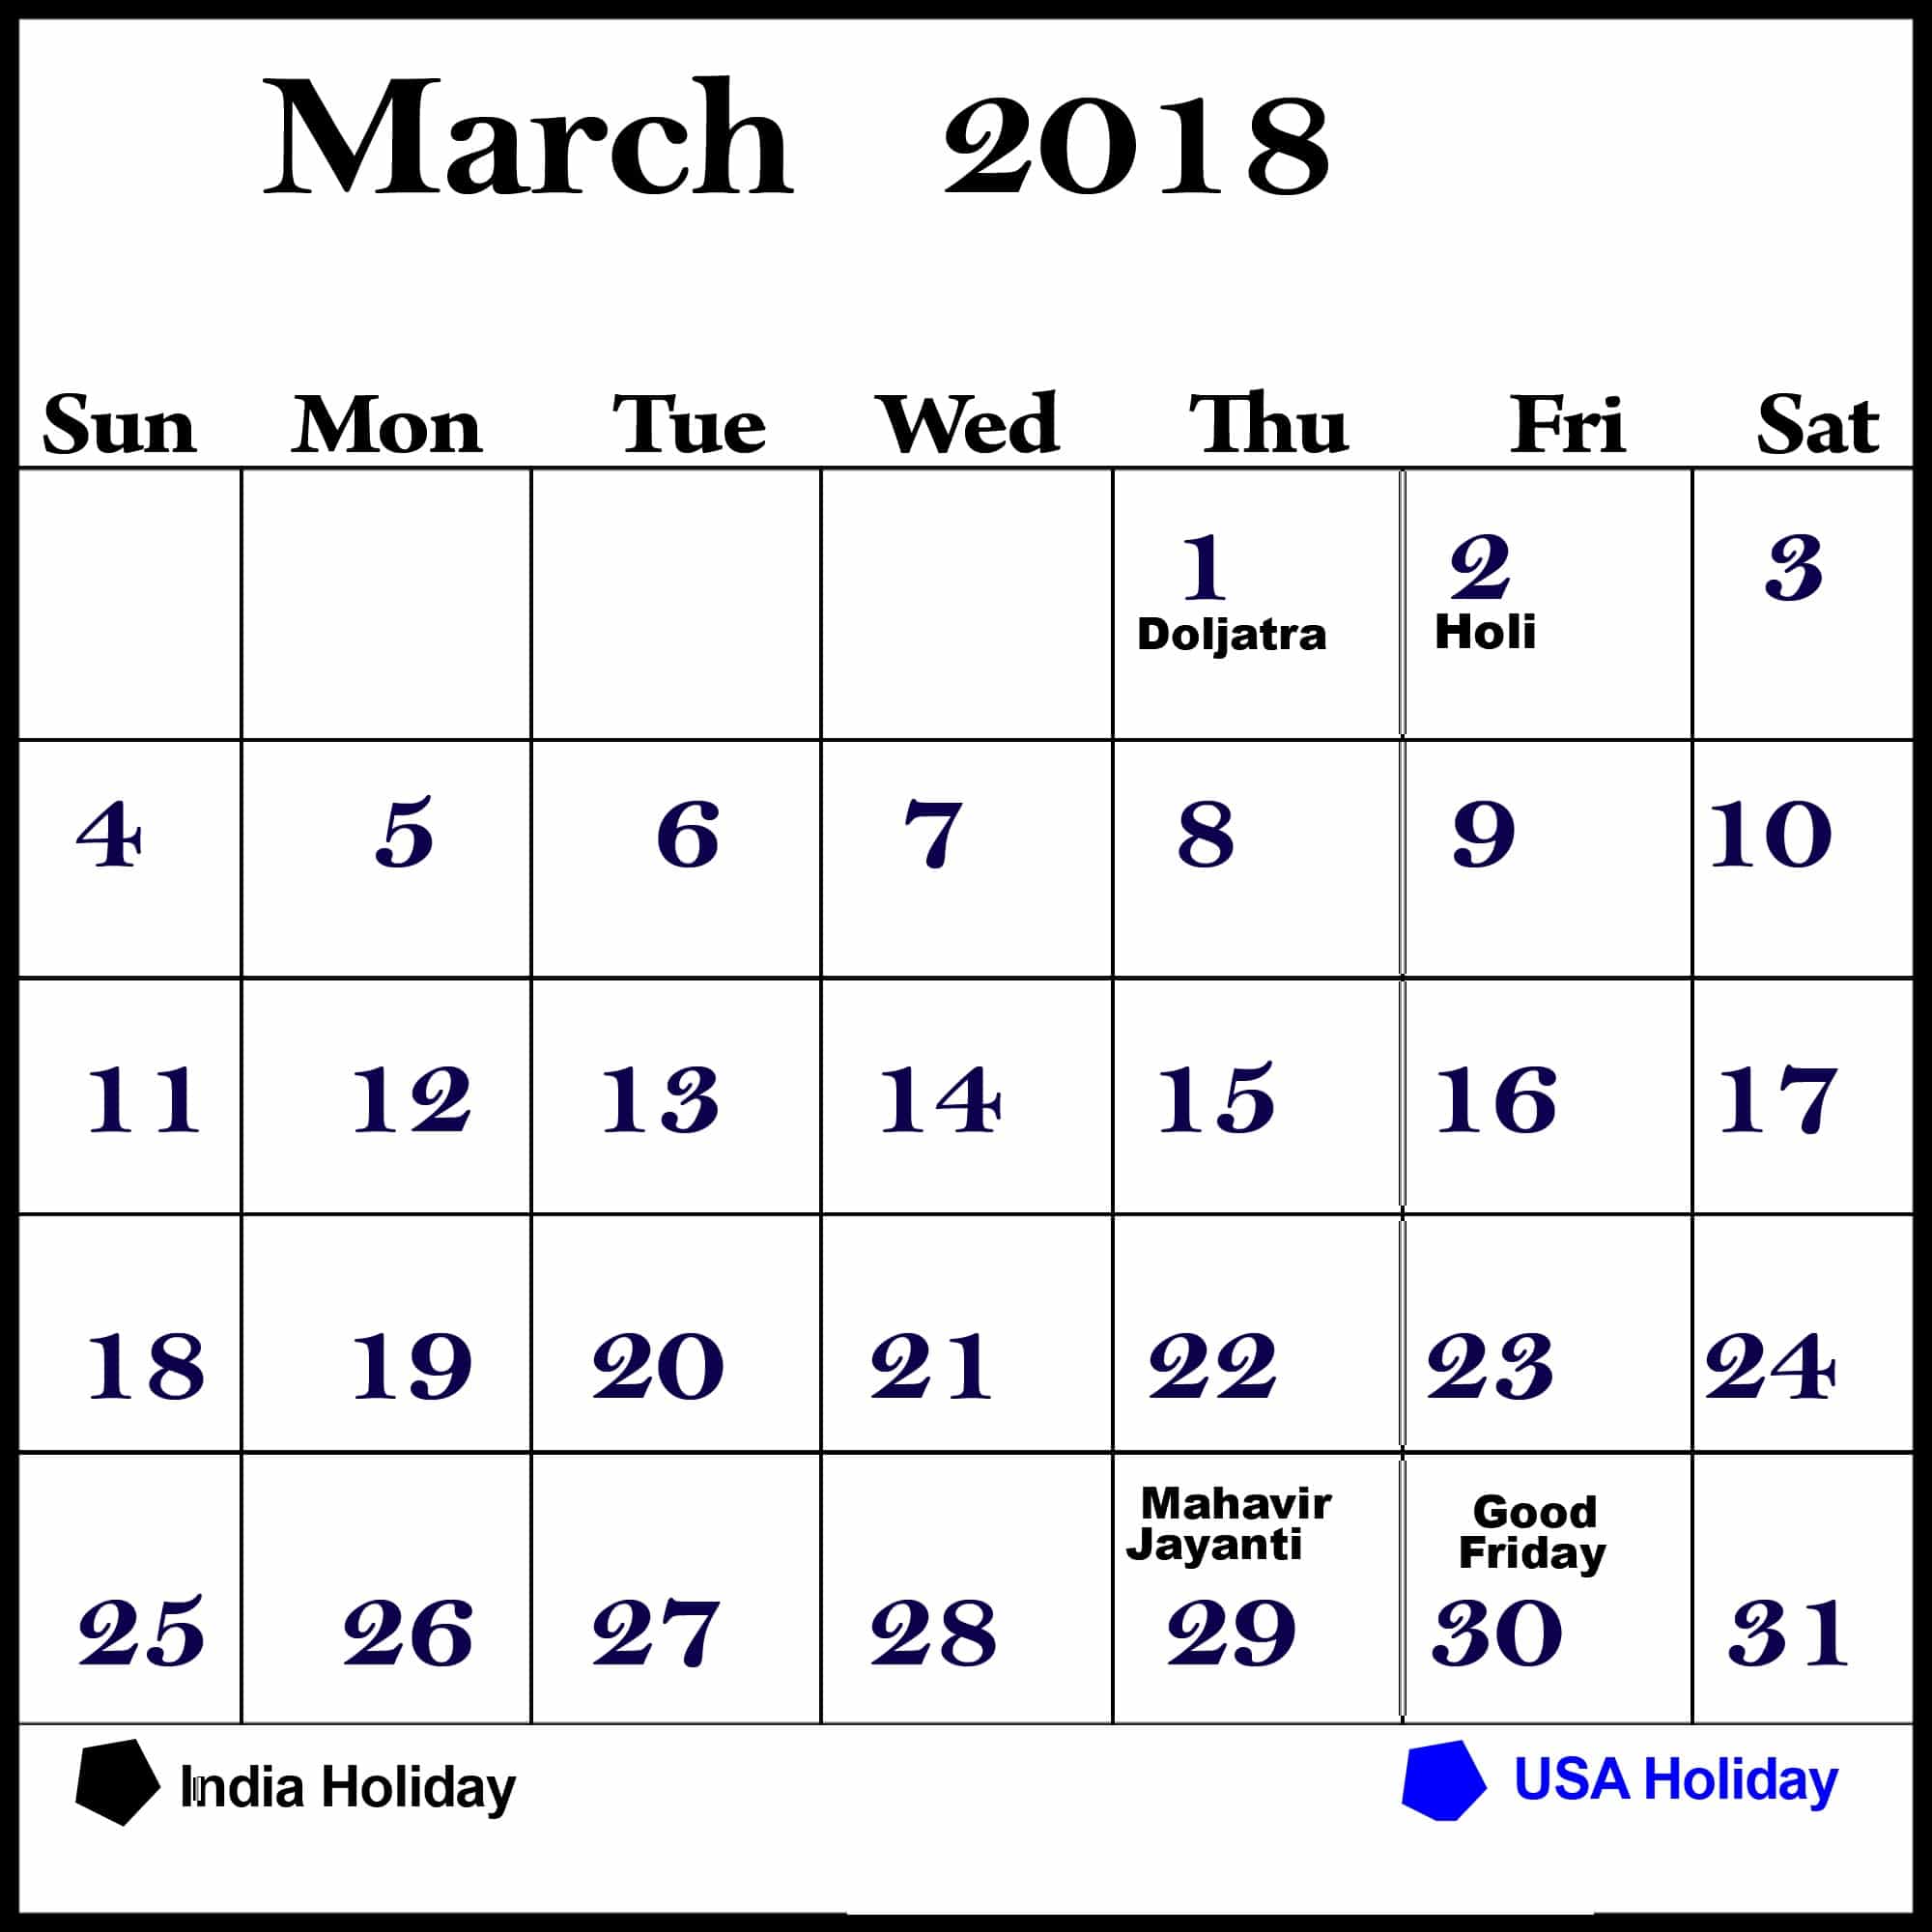 2018 March Calendar With Holidays USA, UK